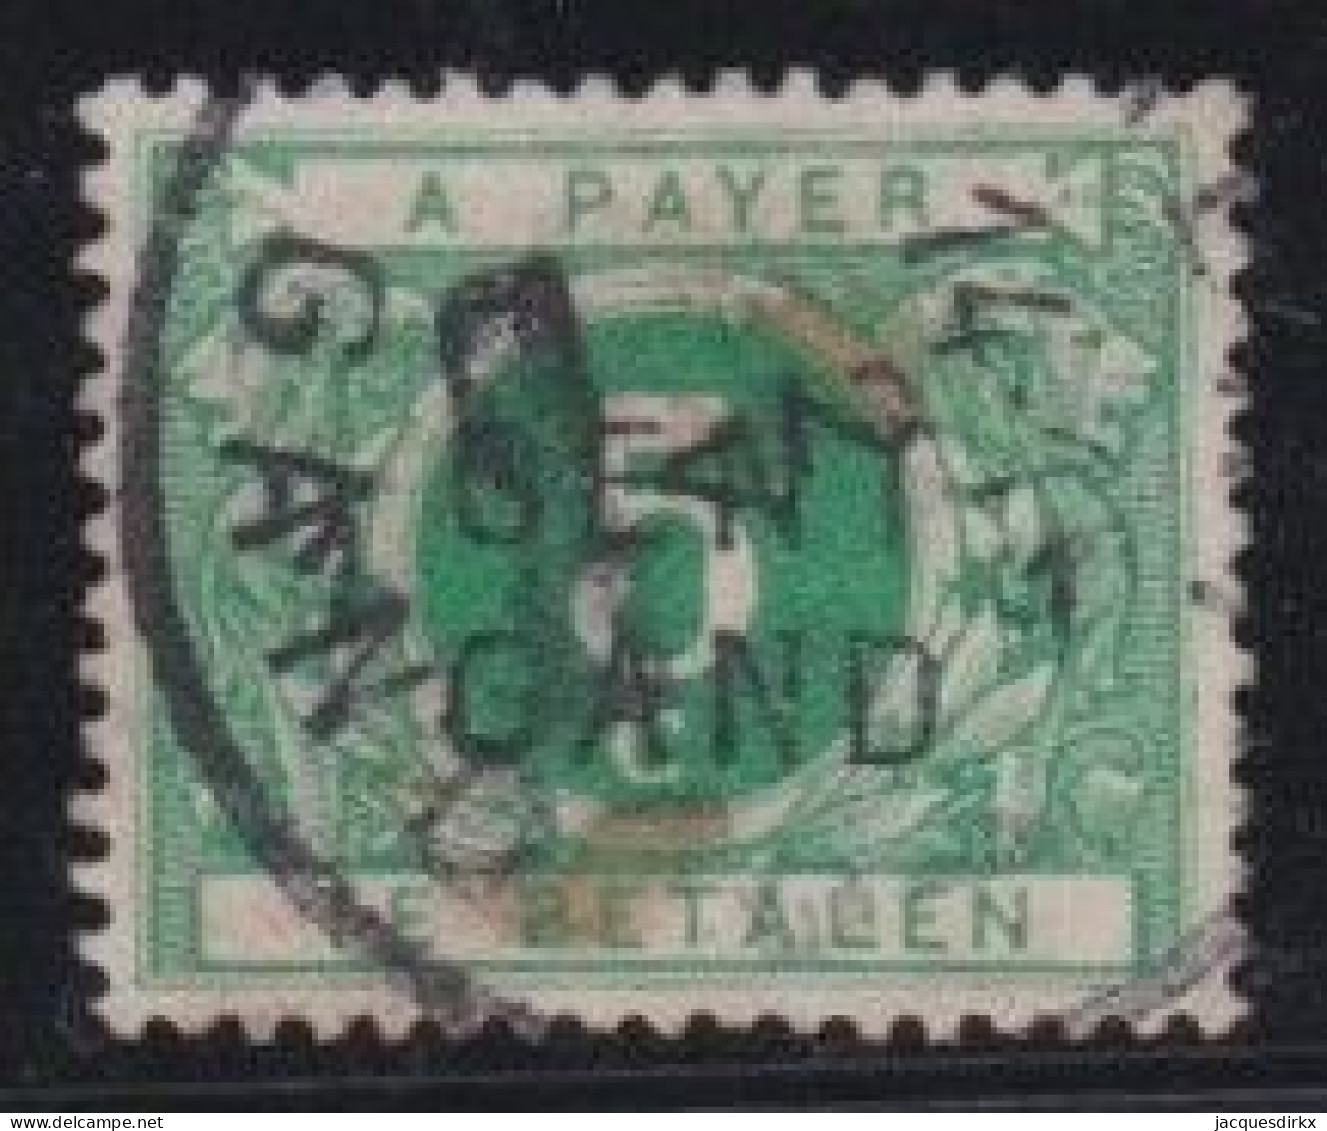 Belgie  .   OBP    .    TX  12A  (2 Scans)      .    O     .   Gestempeld     .   /   .    Oblitéré - Stamps